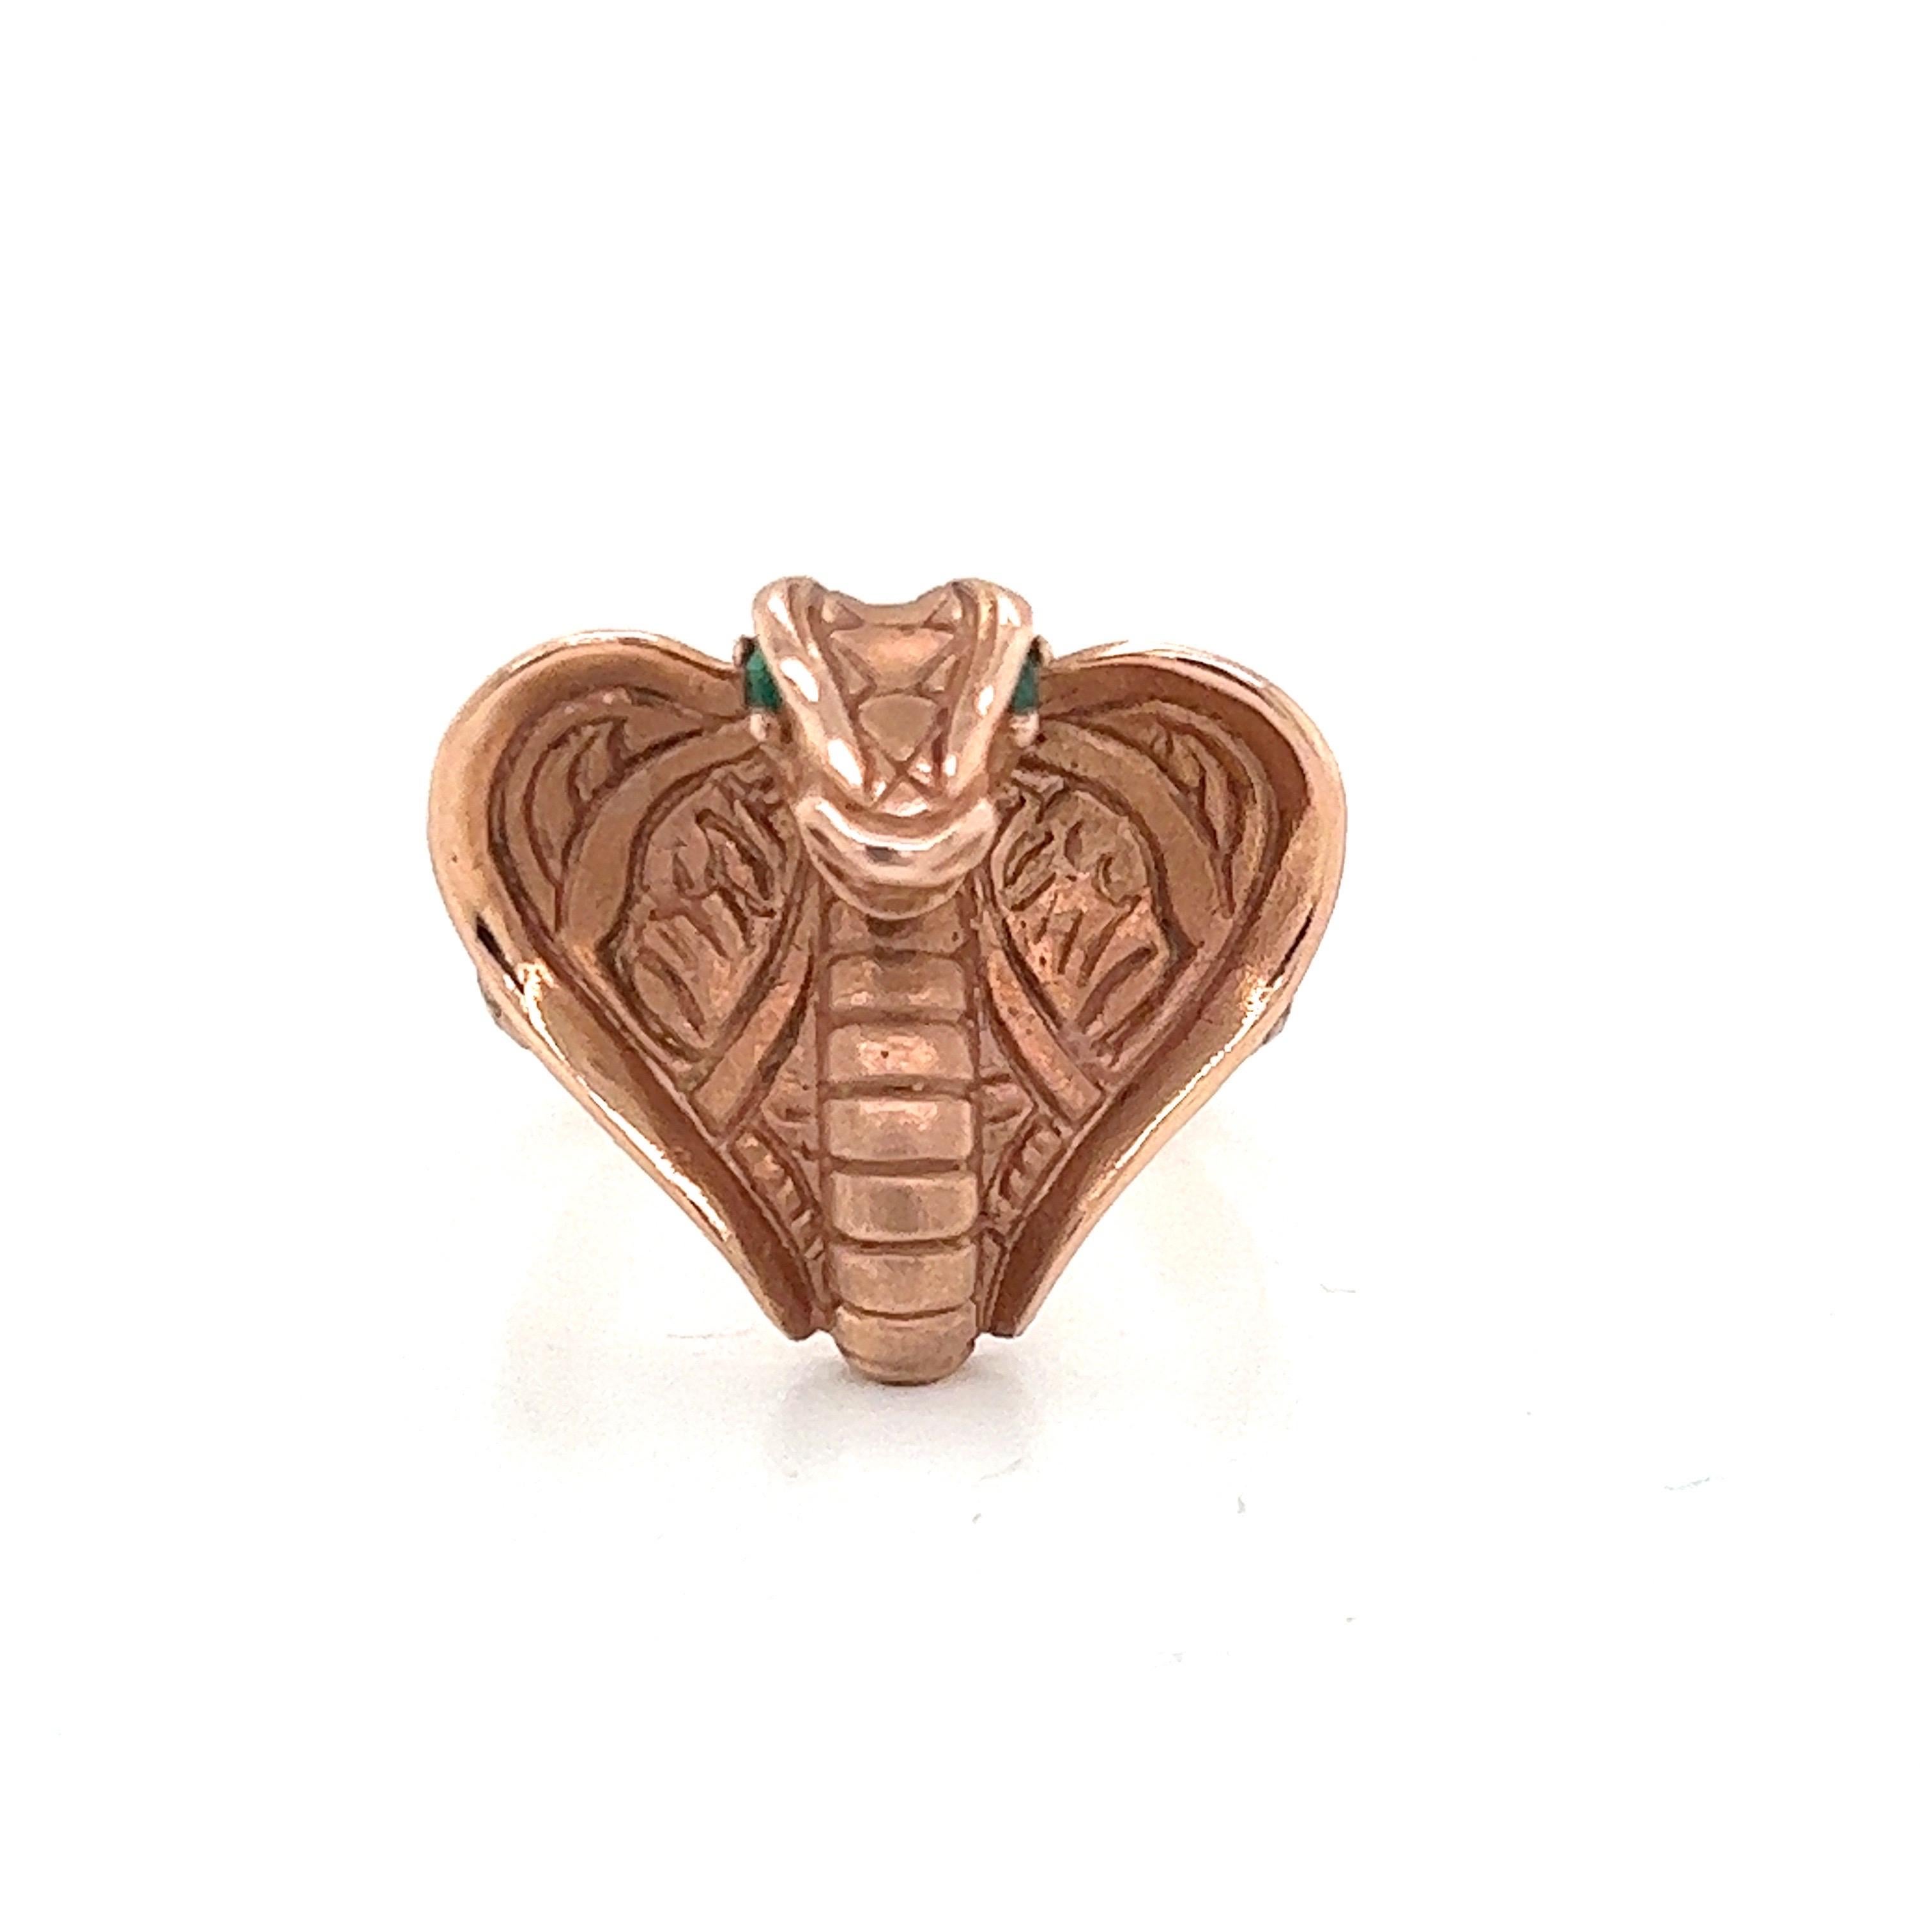 14k pink gold Cobra ring with faceted emerald eyes. Handset gems